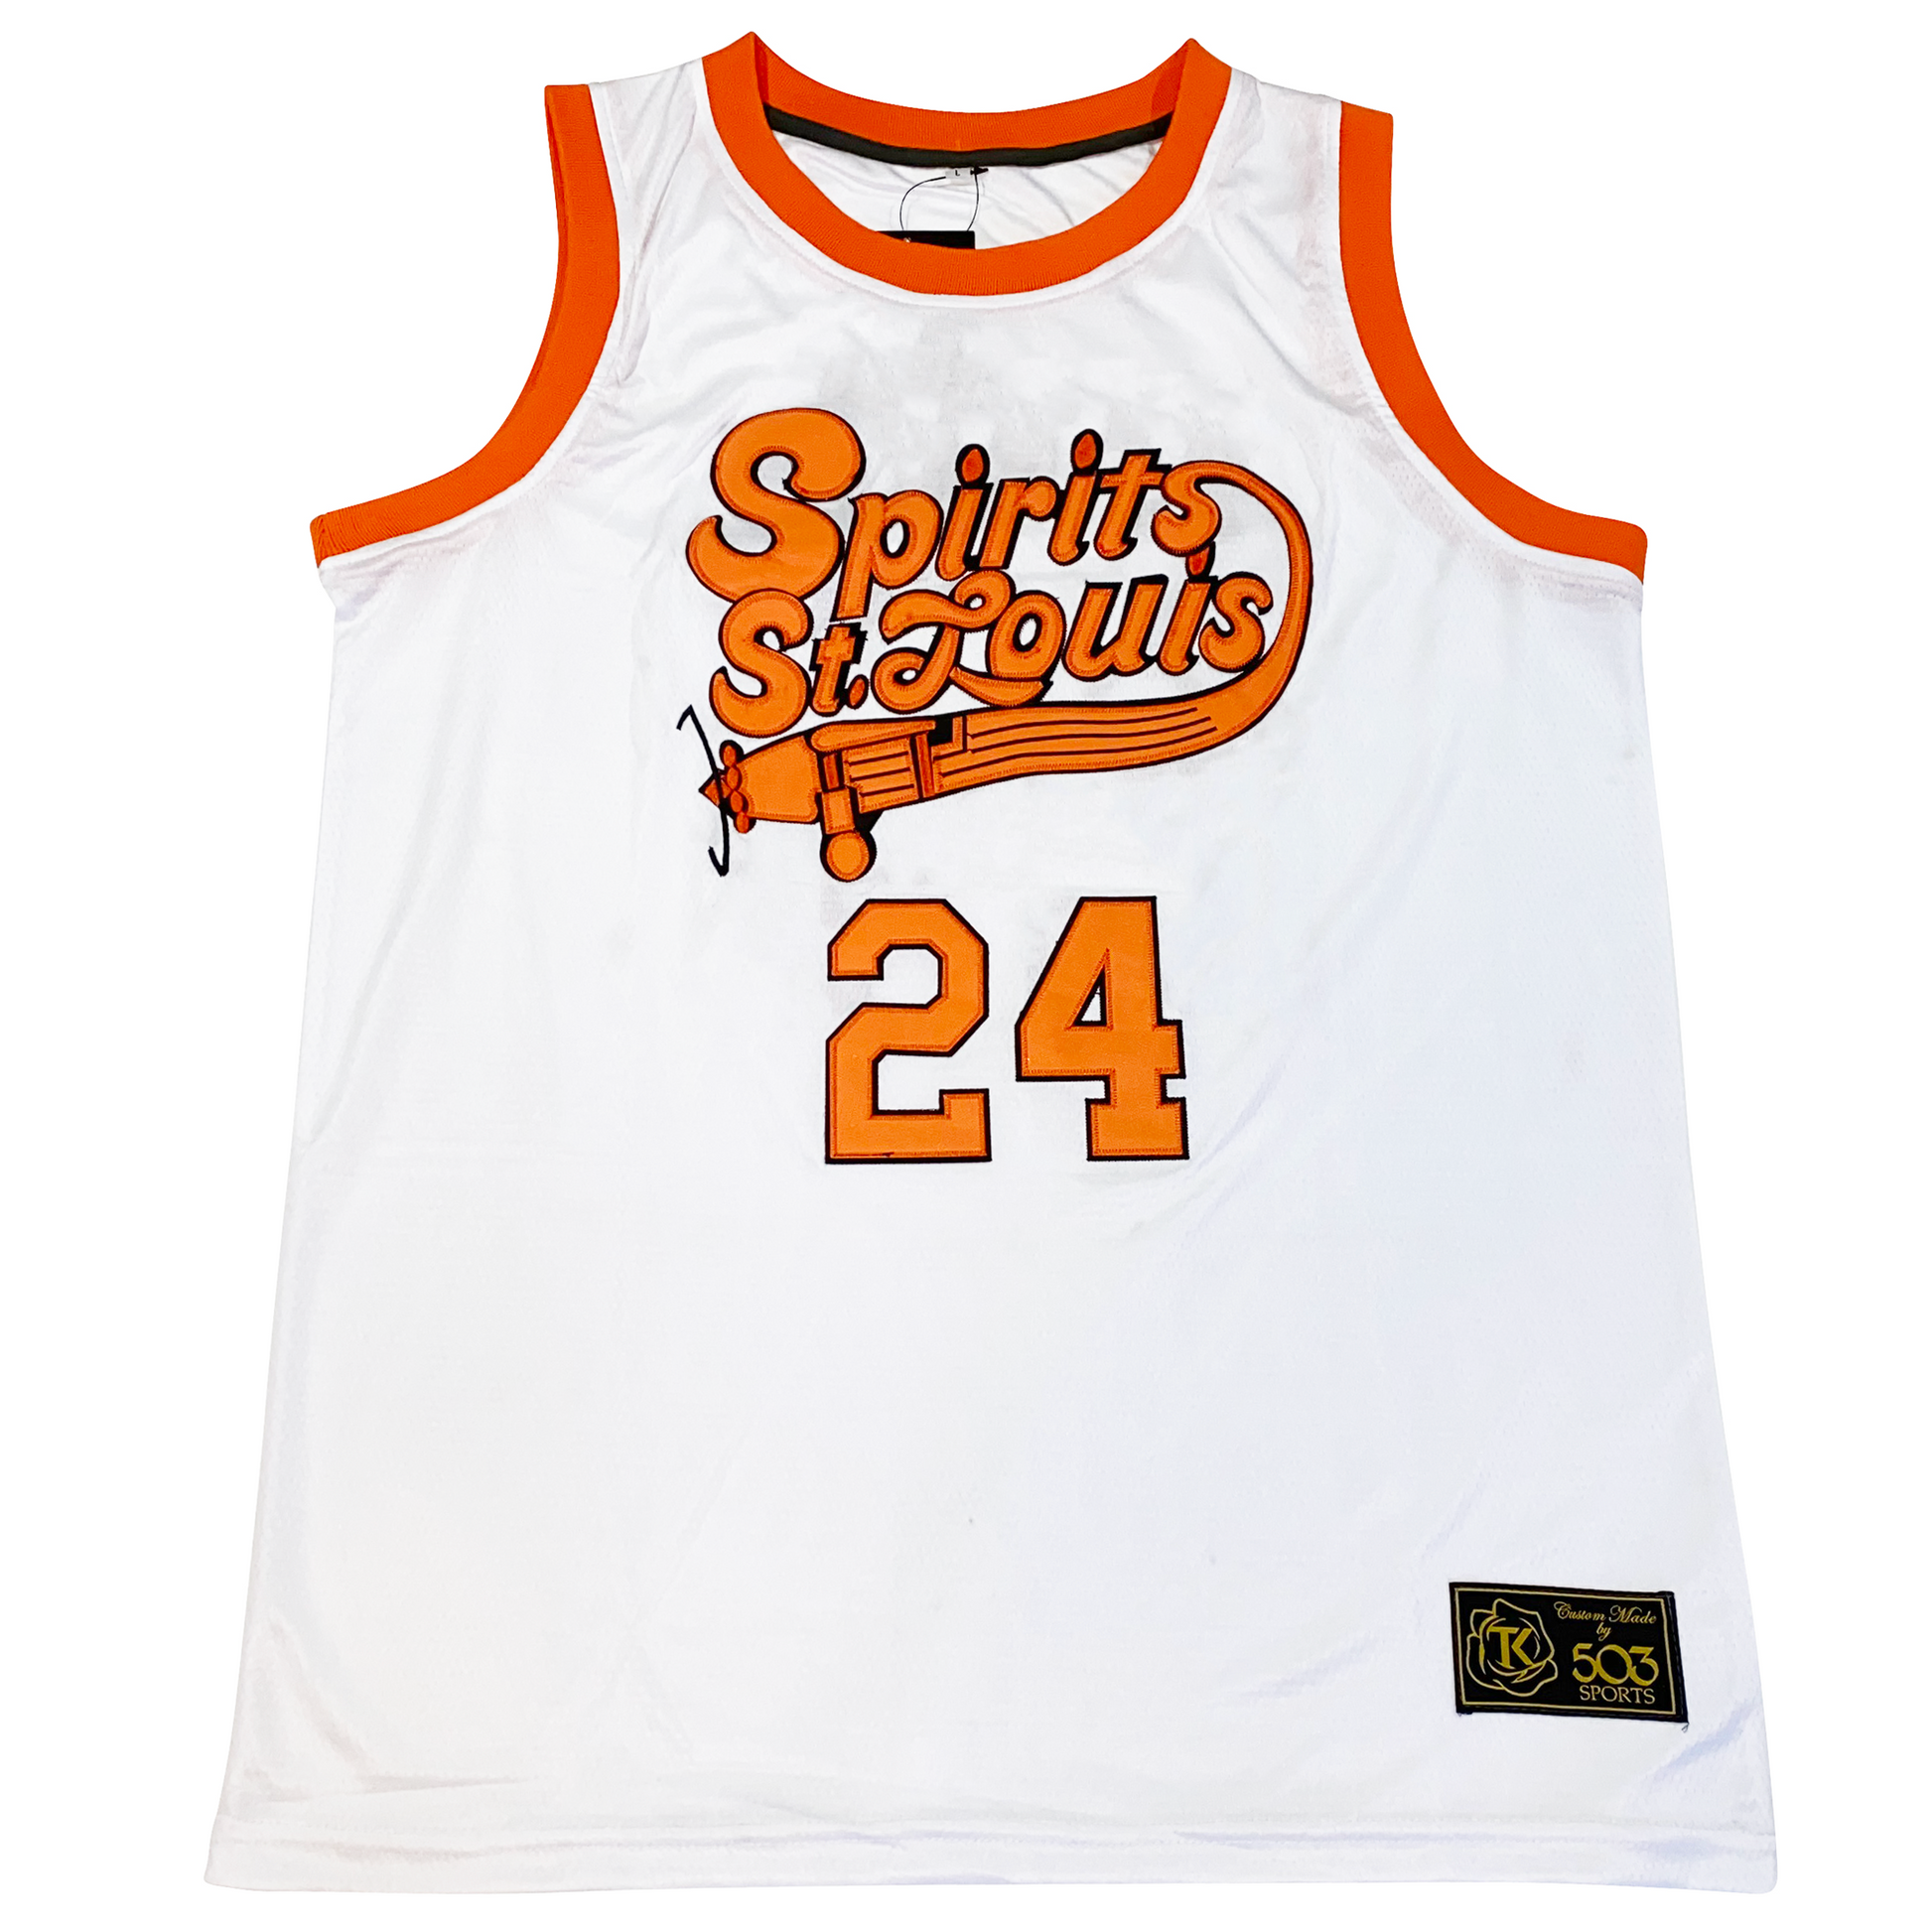 503 Sports Spirits of St Louis T-Shirt - Orange - Cotton - Small (S) - Royal Retros